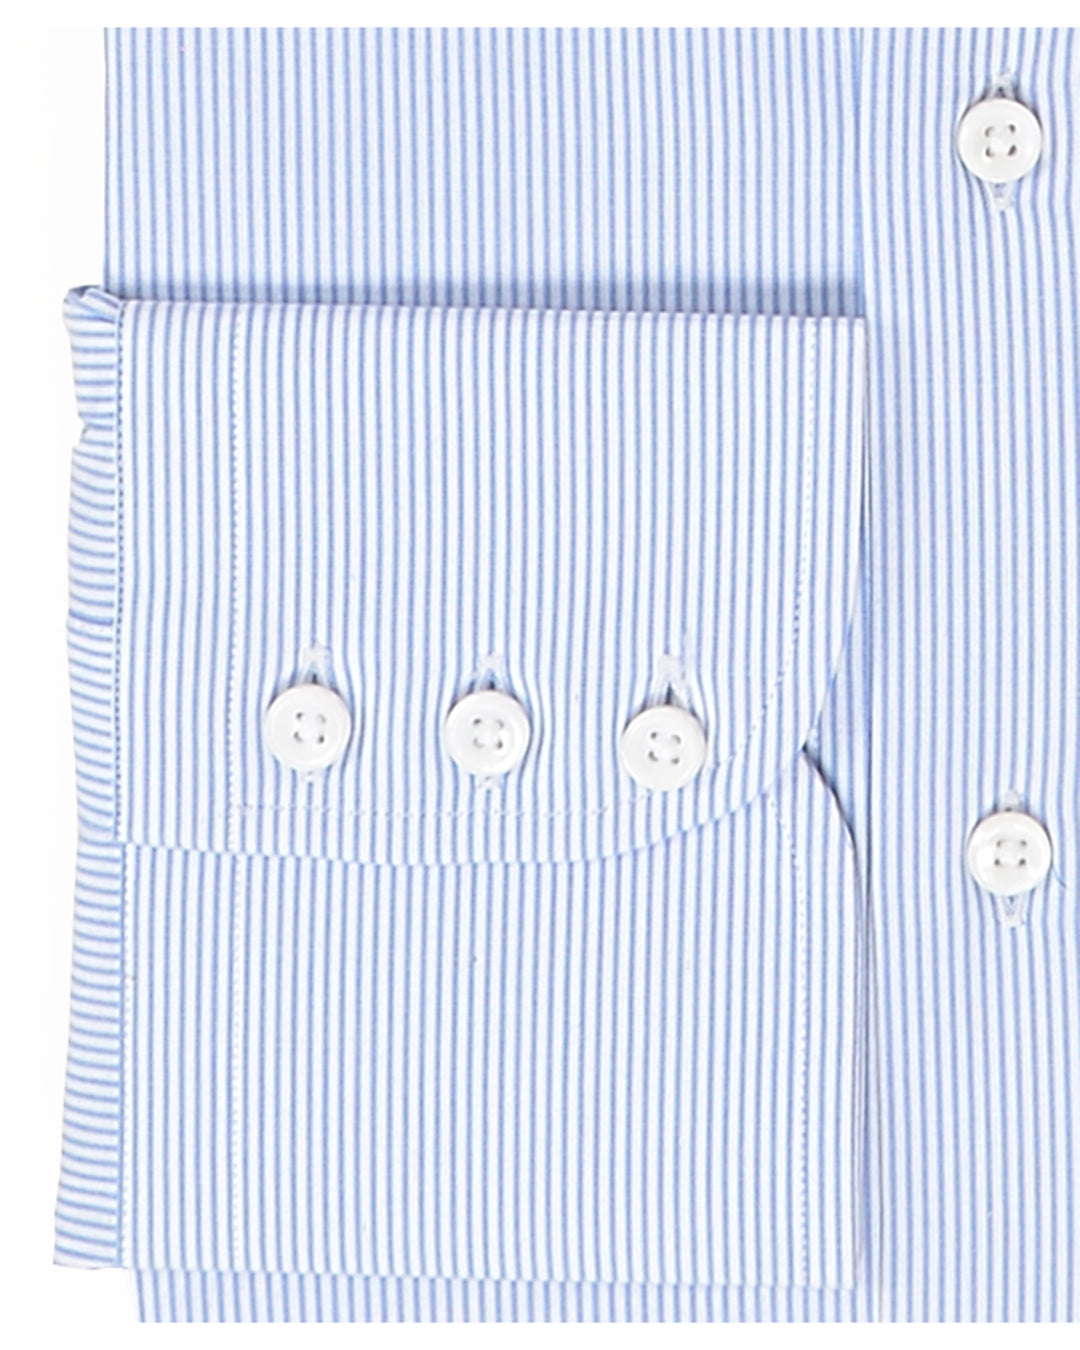 Blue on White Pin Stripes Dress Shirt